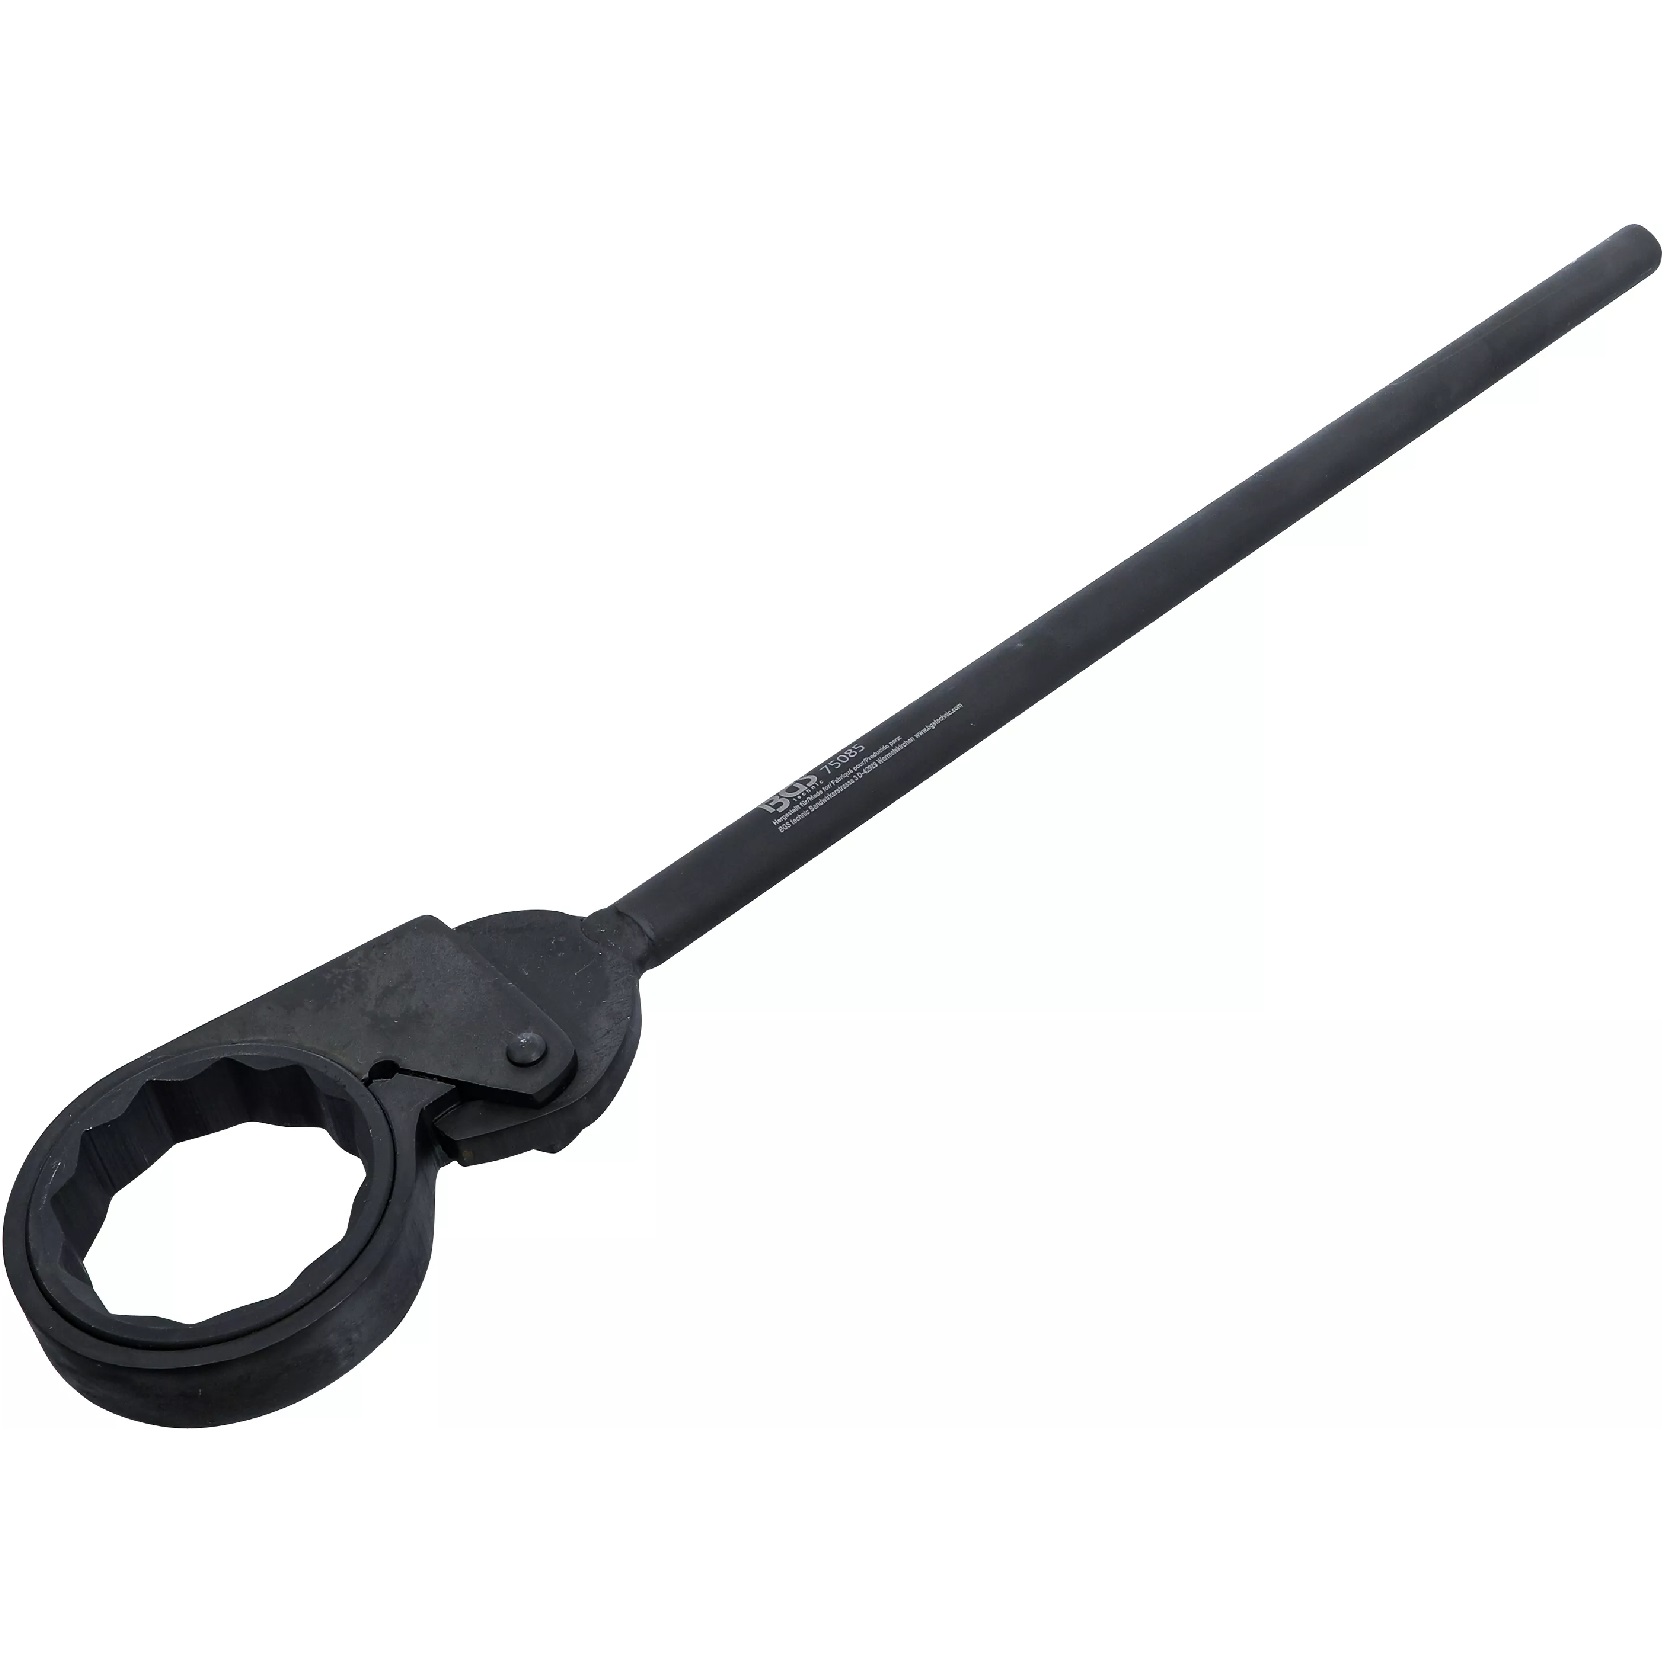 Kľúč voľnobežný, 85 mm, BGS 1075085